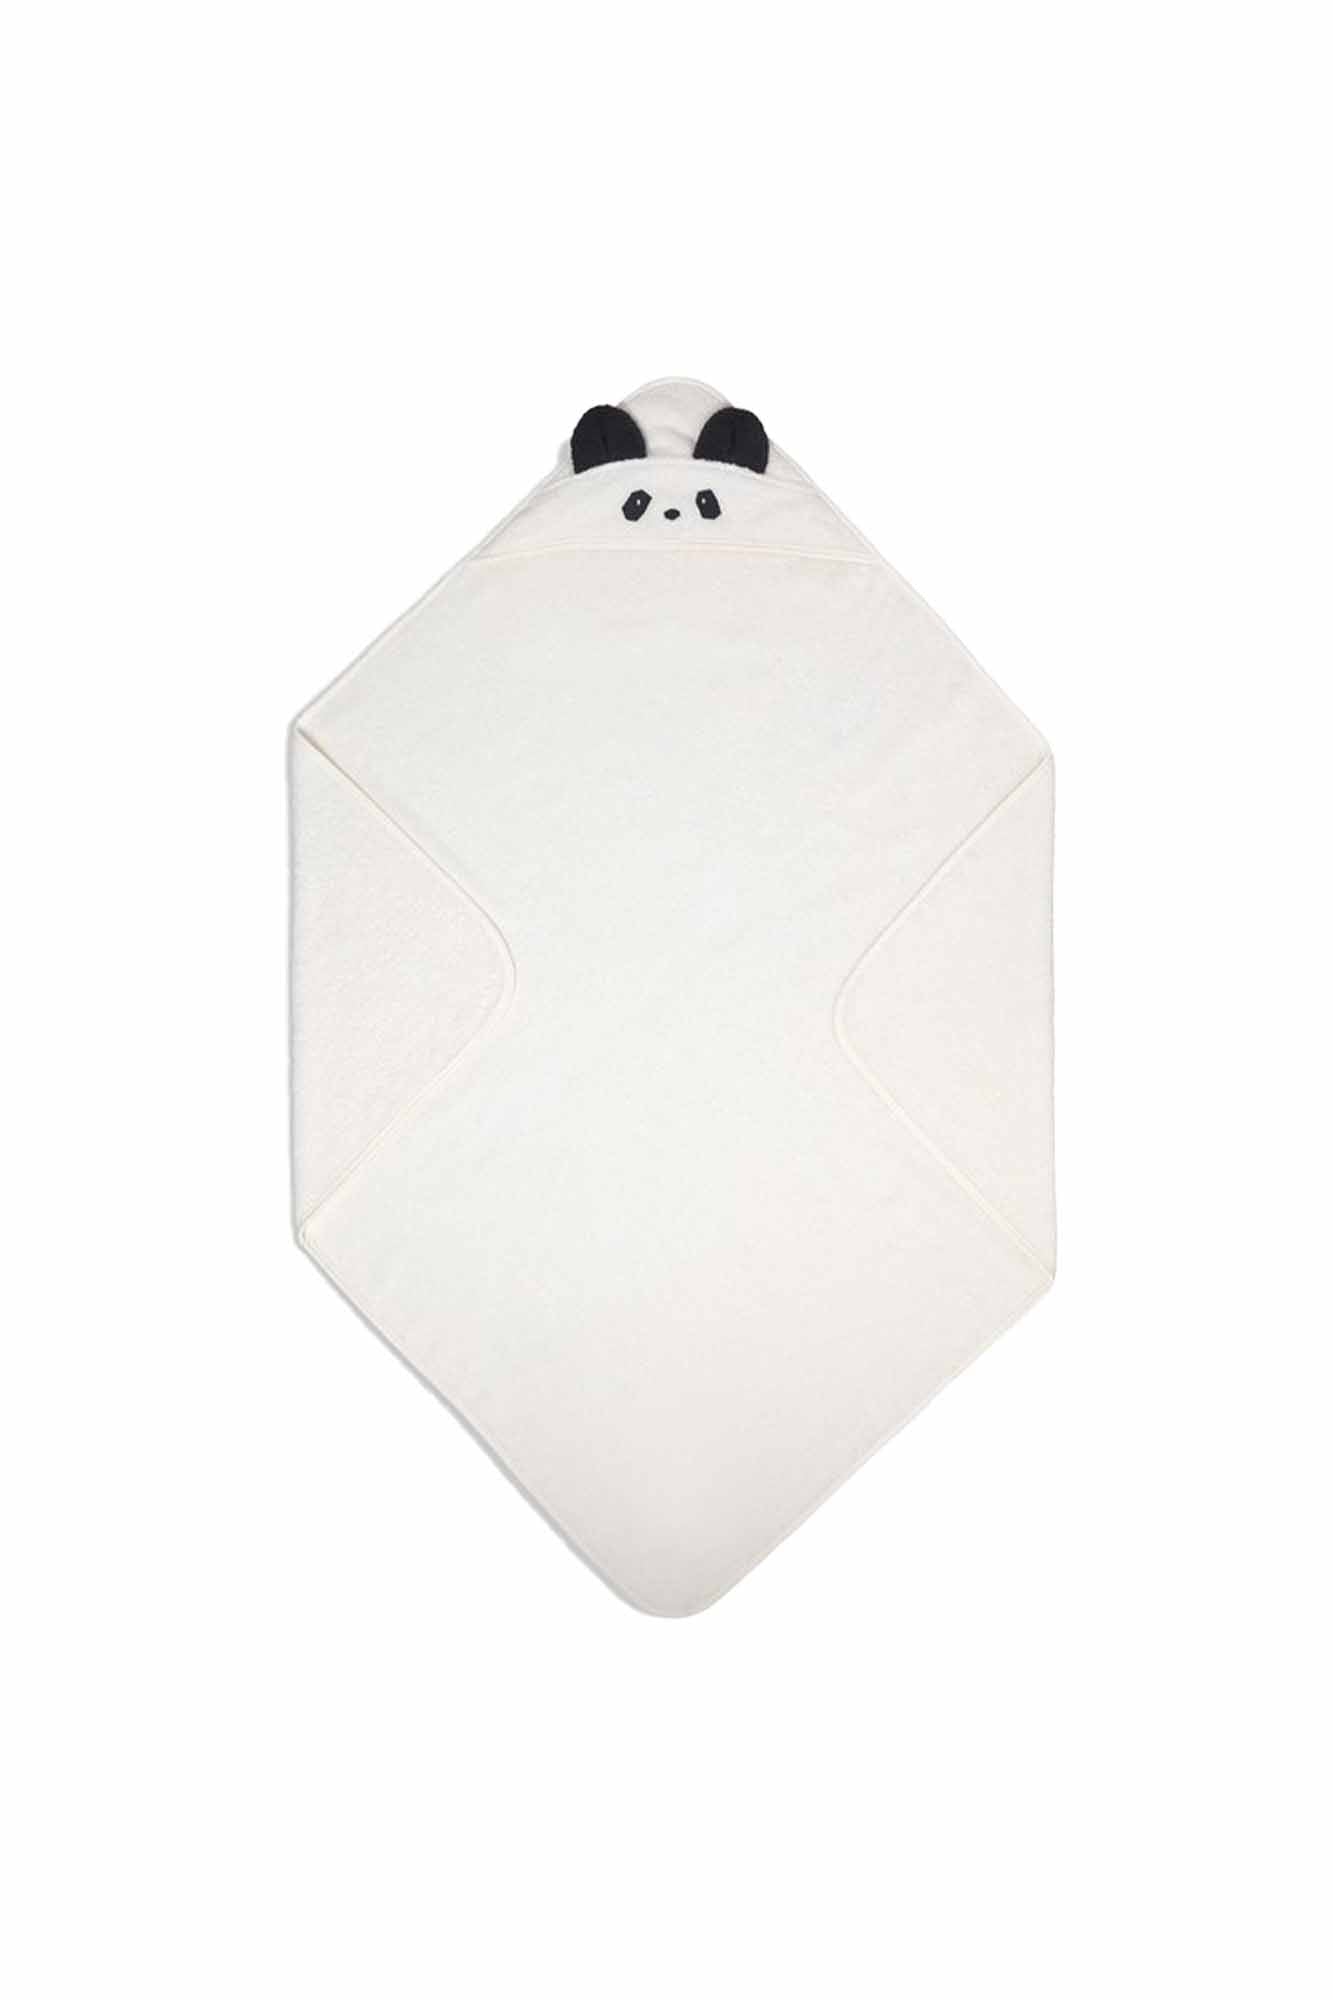 Liewood Panda Creme De La Creme Albert Hooded Towel